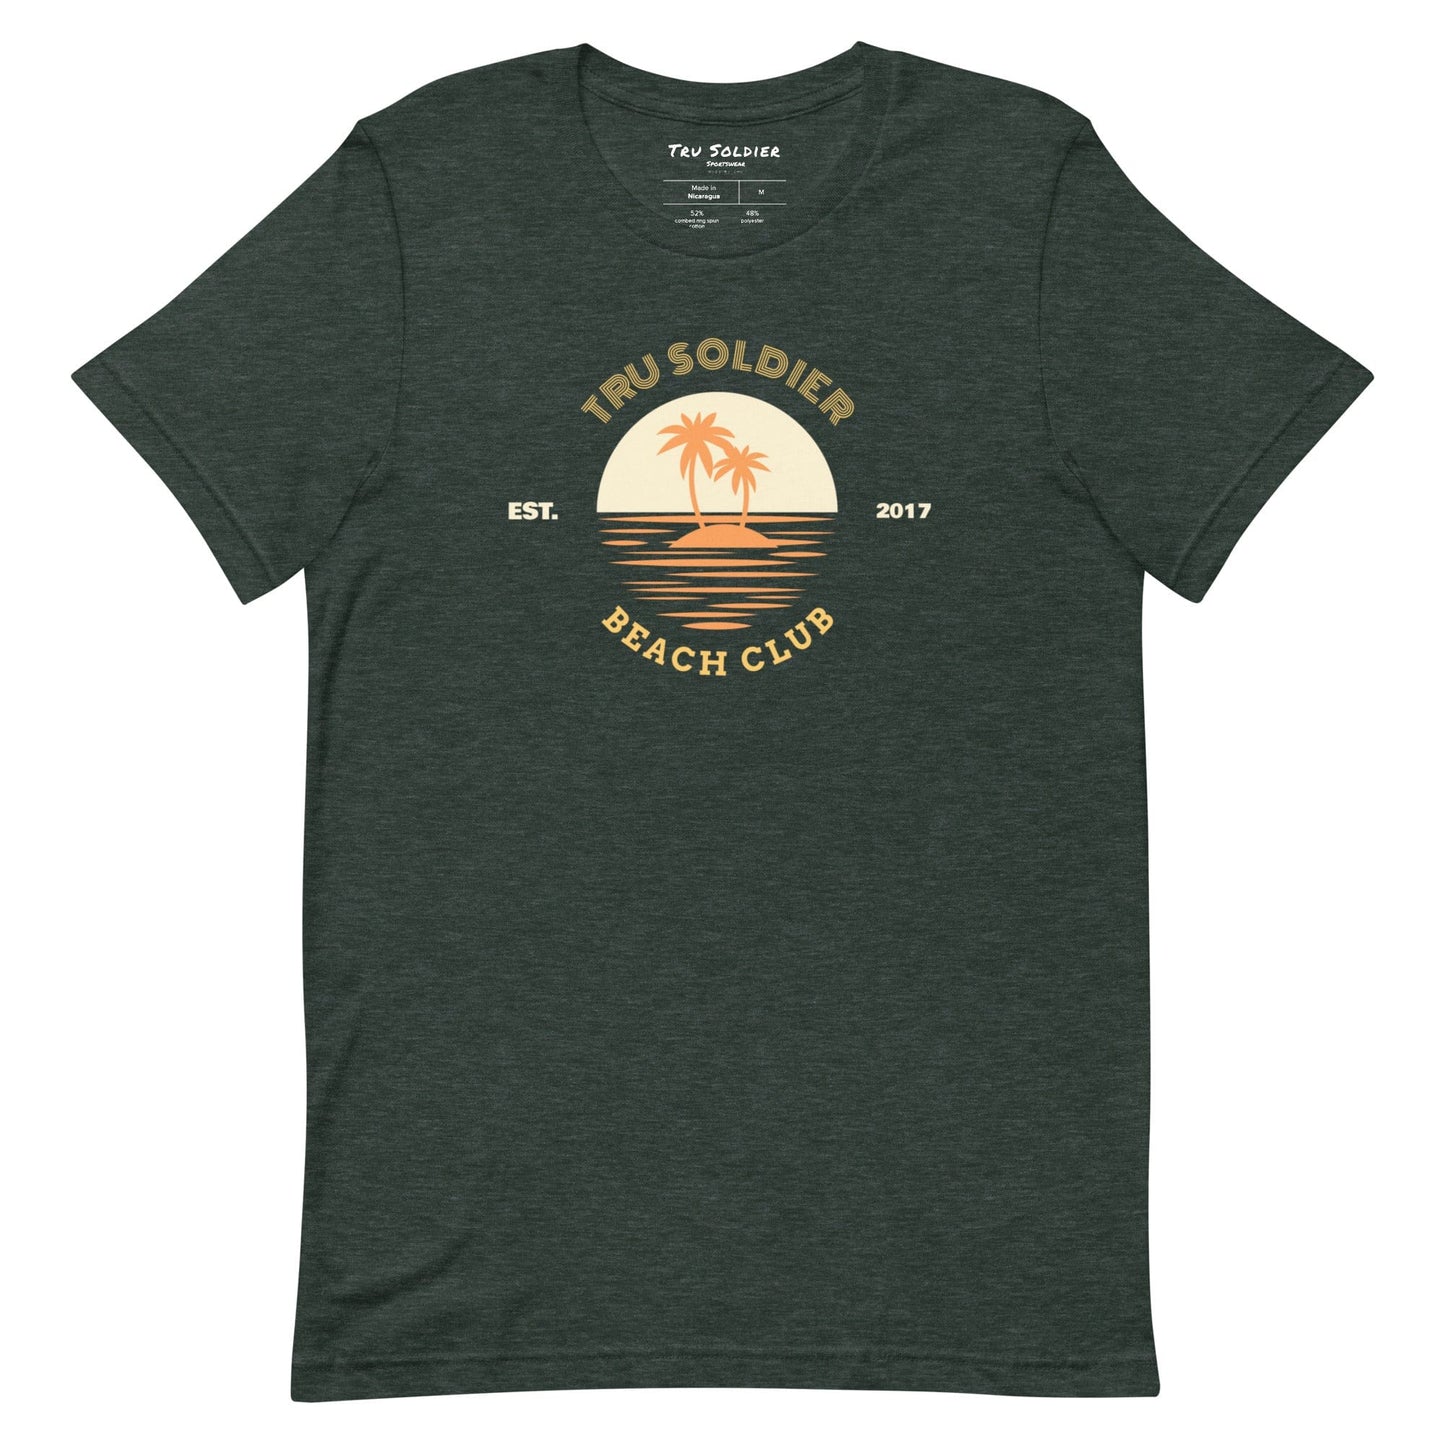 Tru Soldier Sportswear  Heather Forest / S Beach Club t-shirt